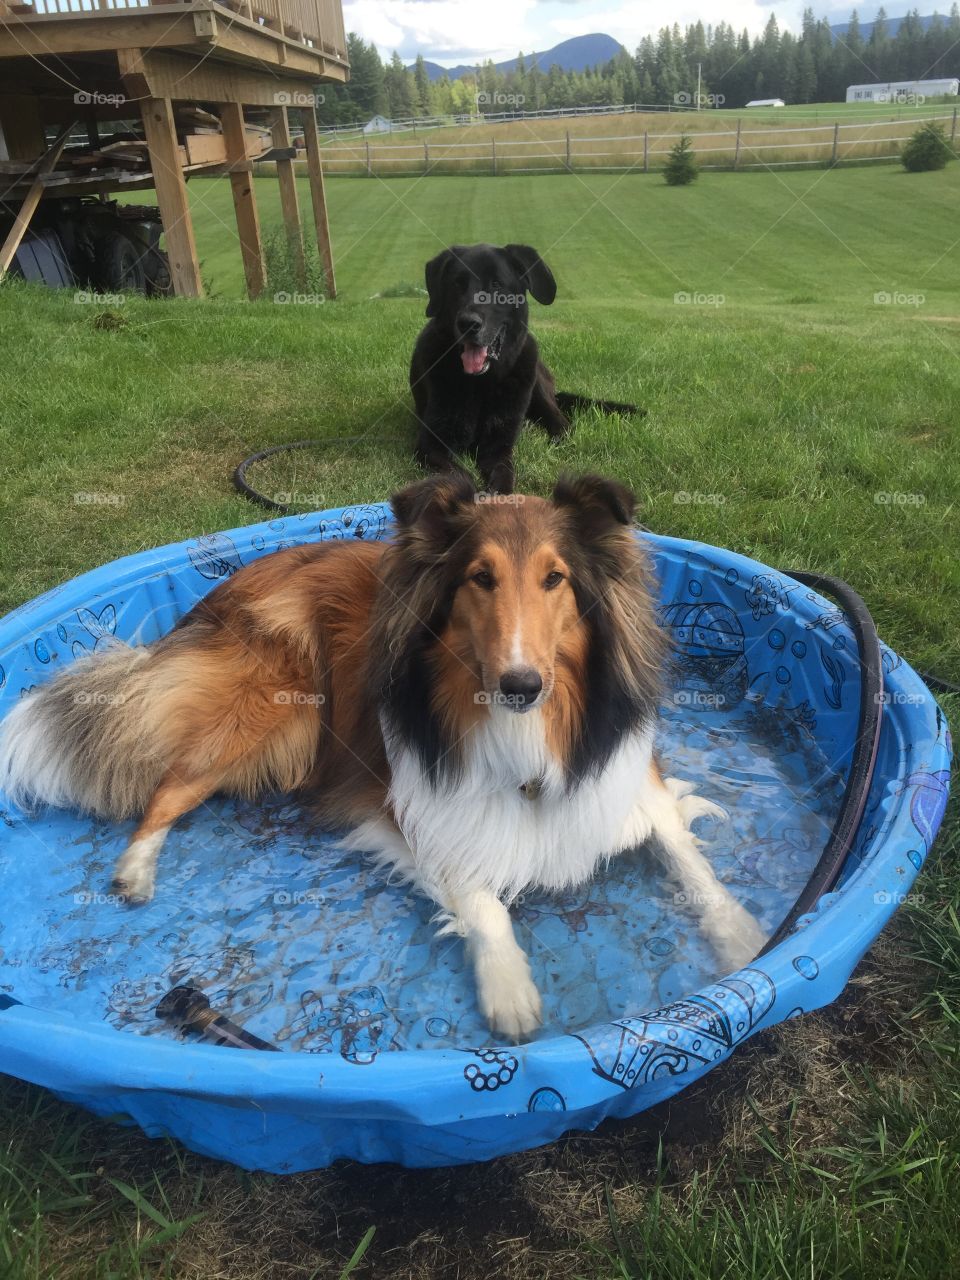 Doggy pool